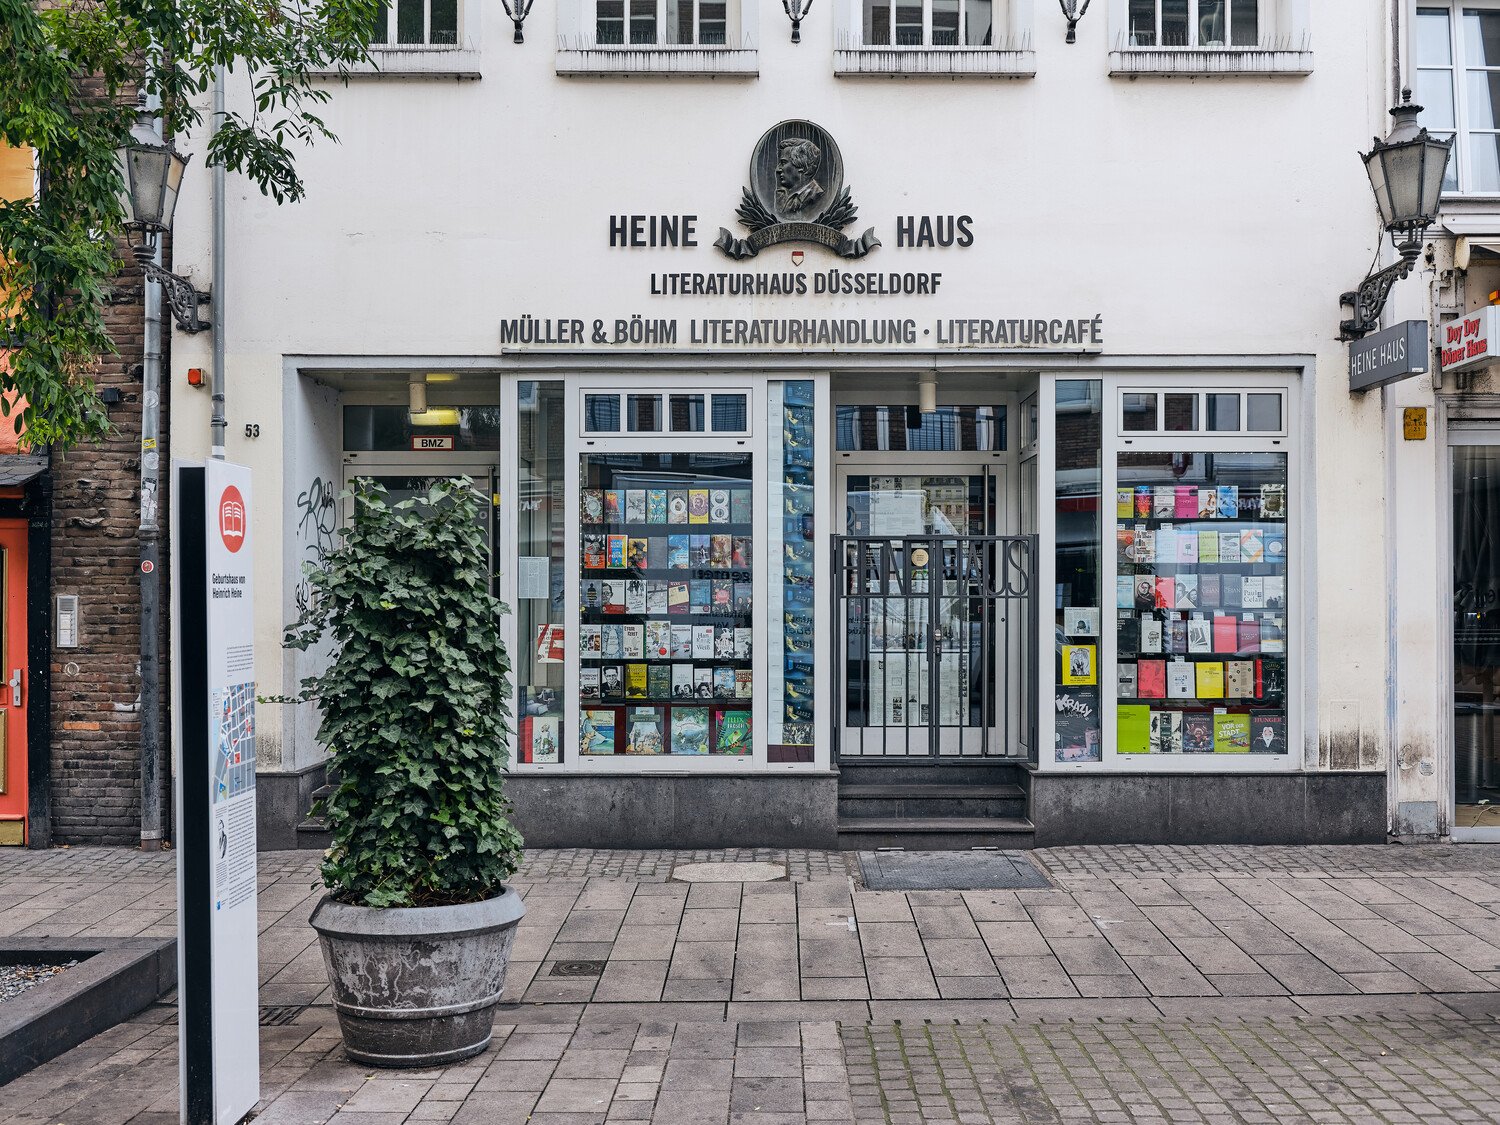 Image of Heine Haus Literaturhaus Düsseldorf